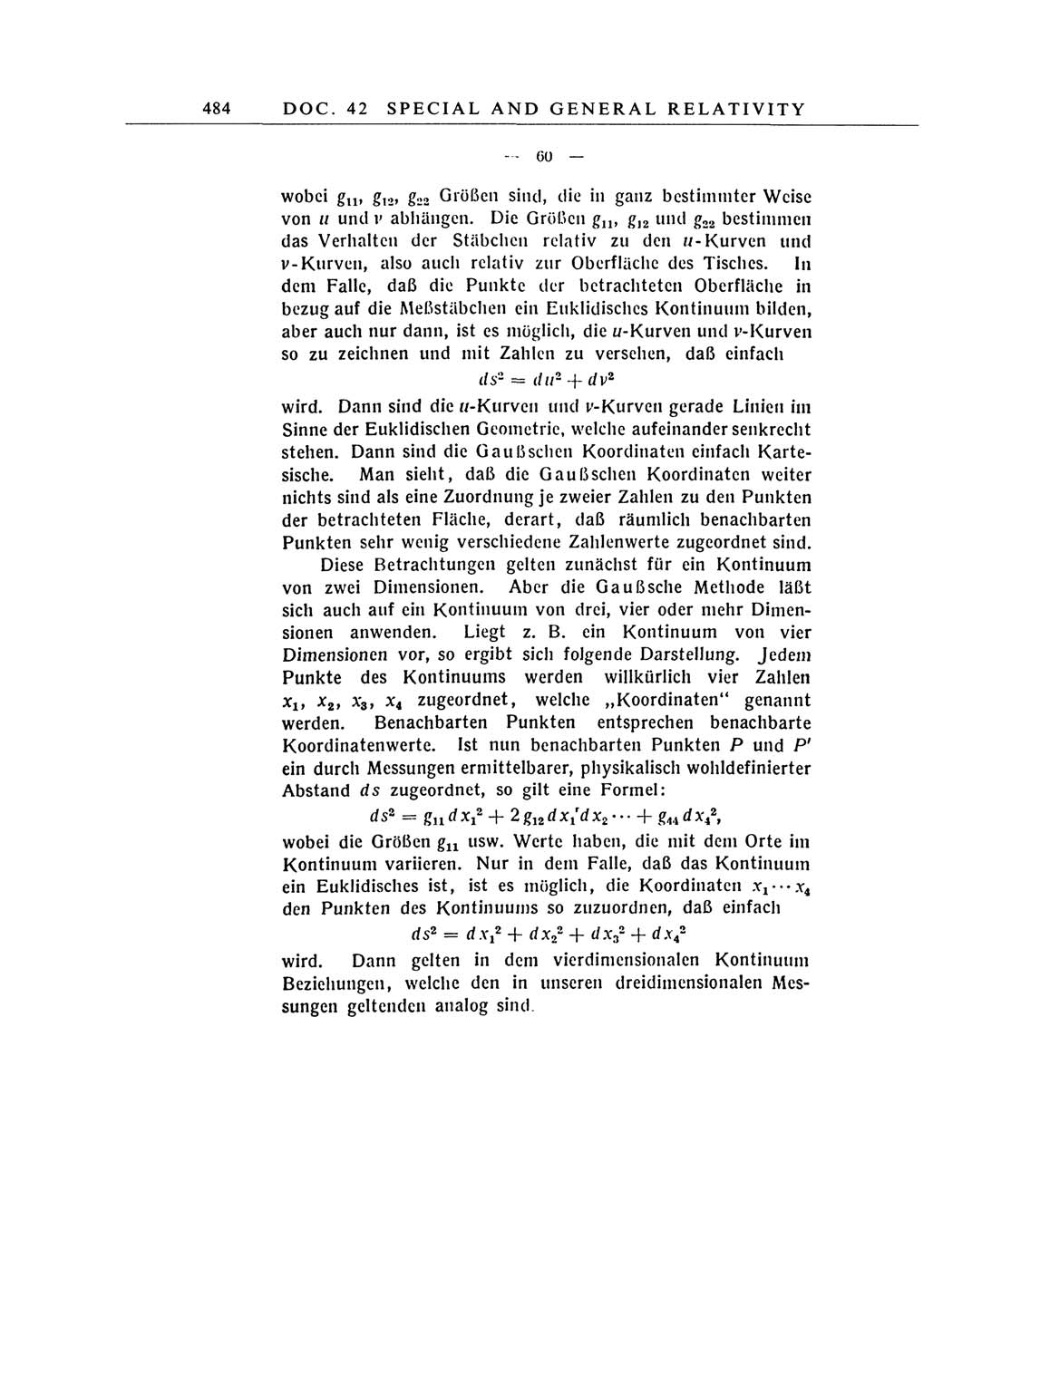 Volume 6: The Berlin Years: Writings, 1914-1917 page 484